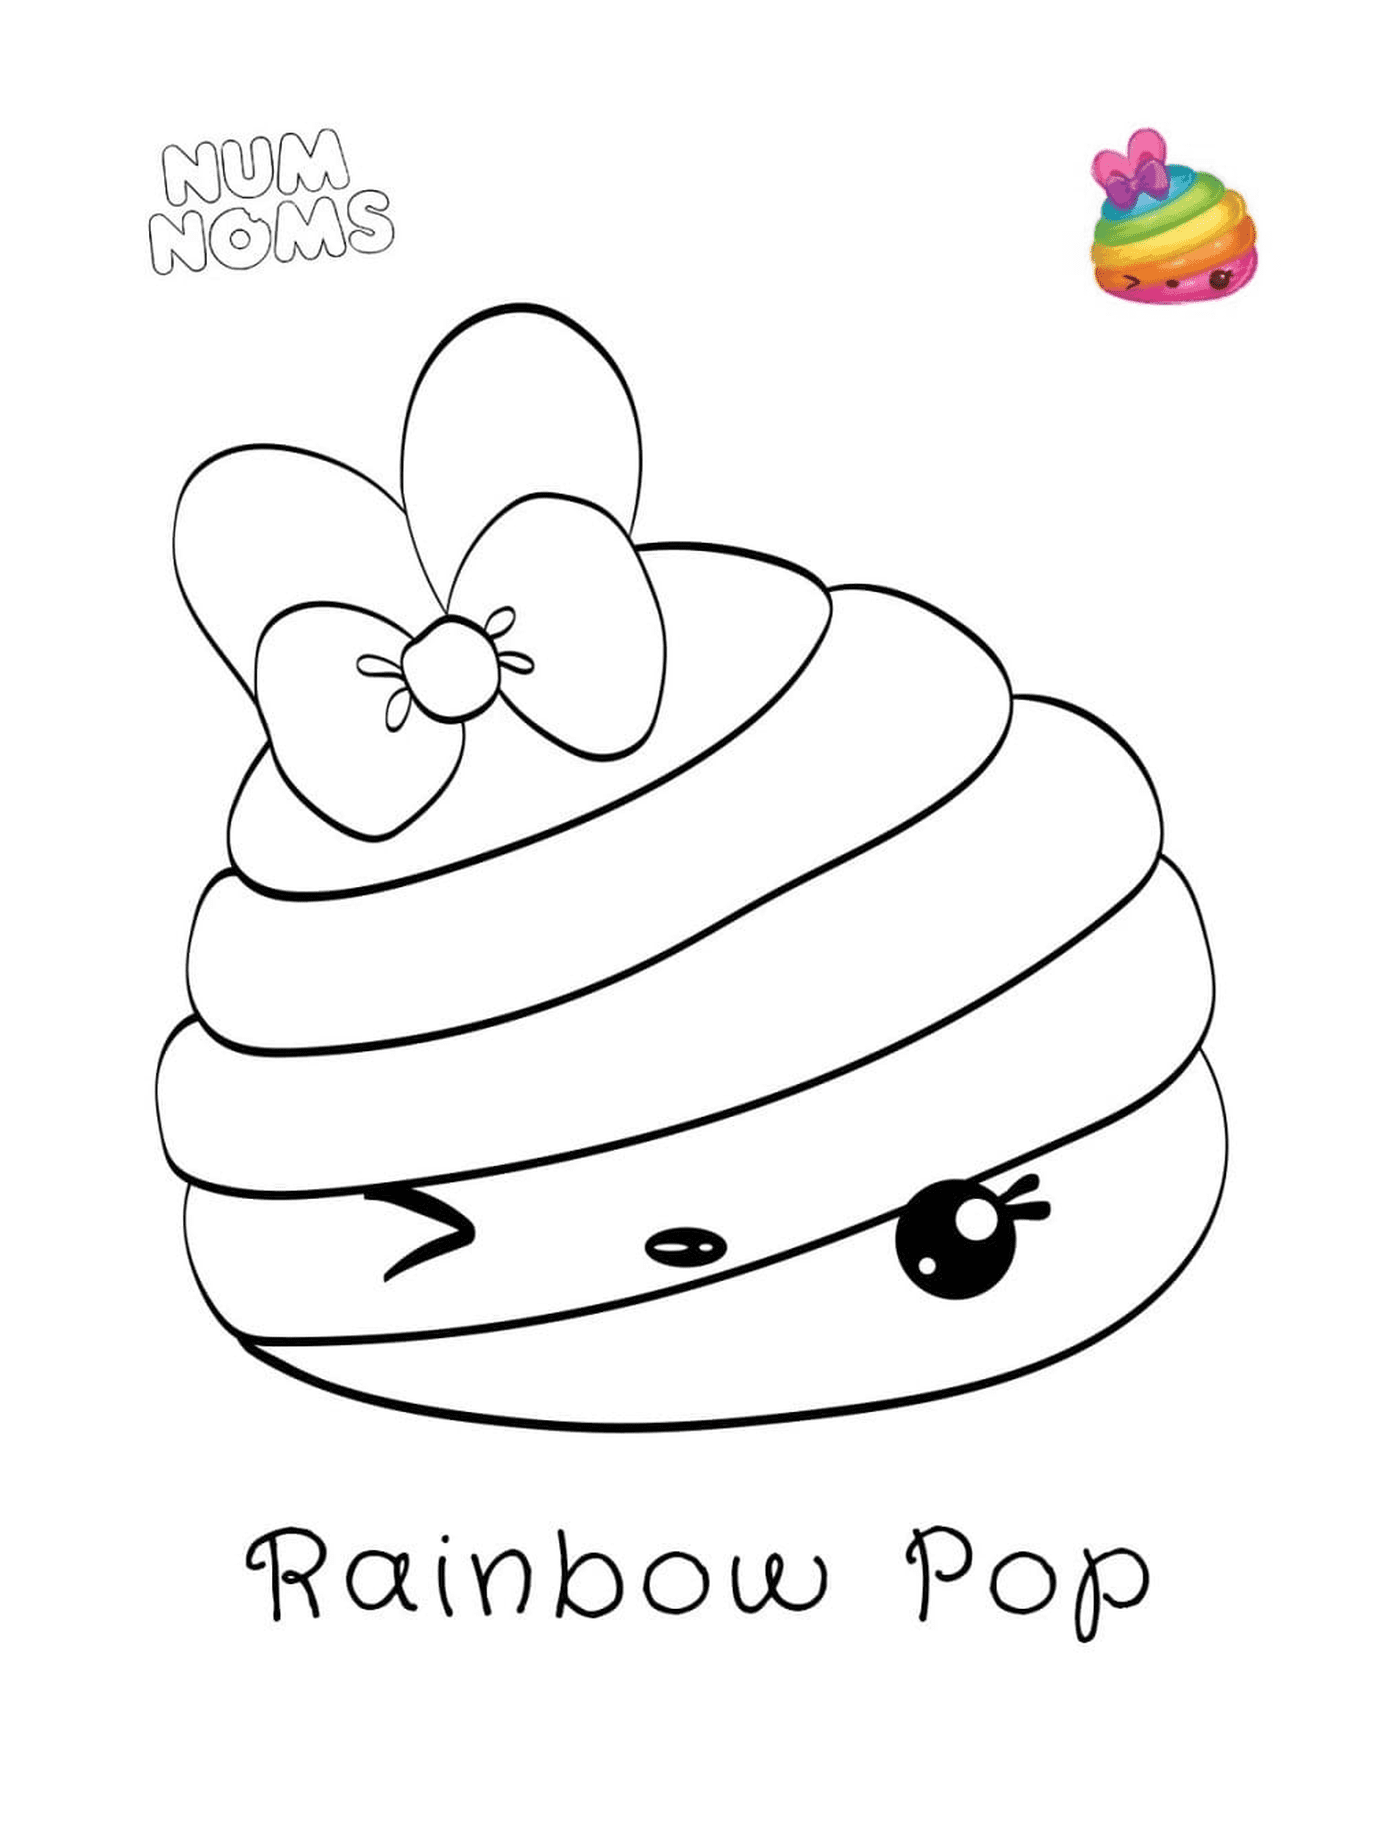  Cupcake with rainbow knot 